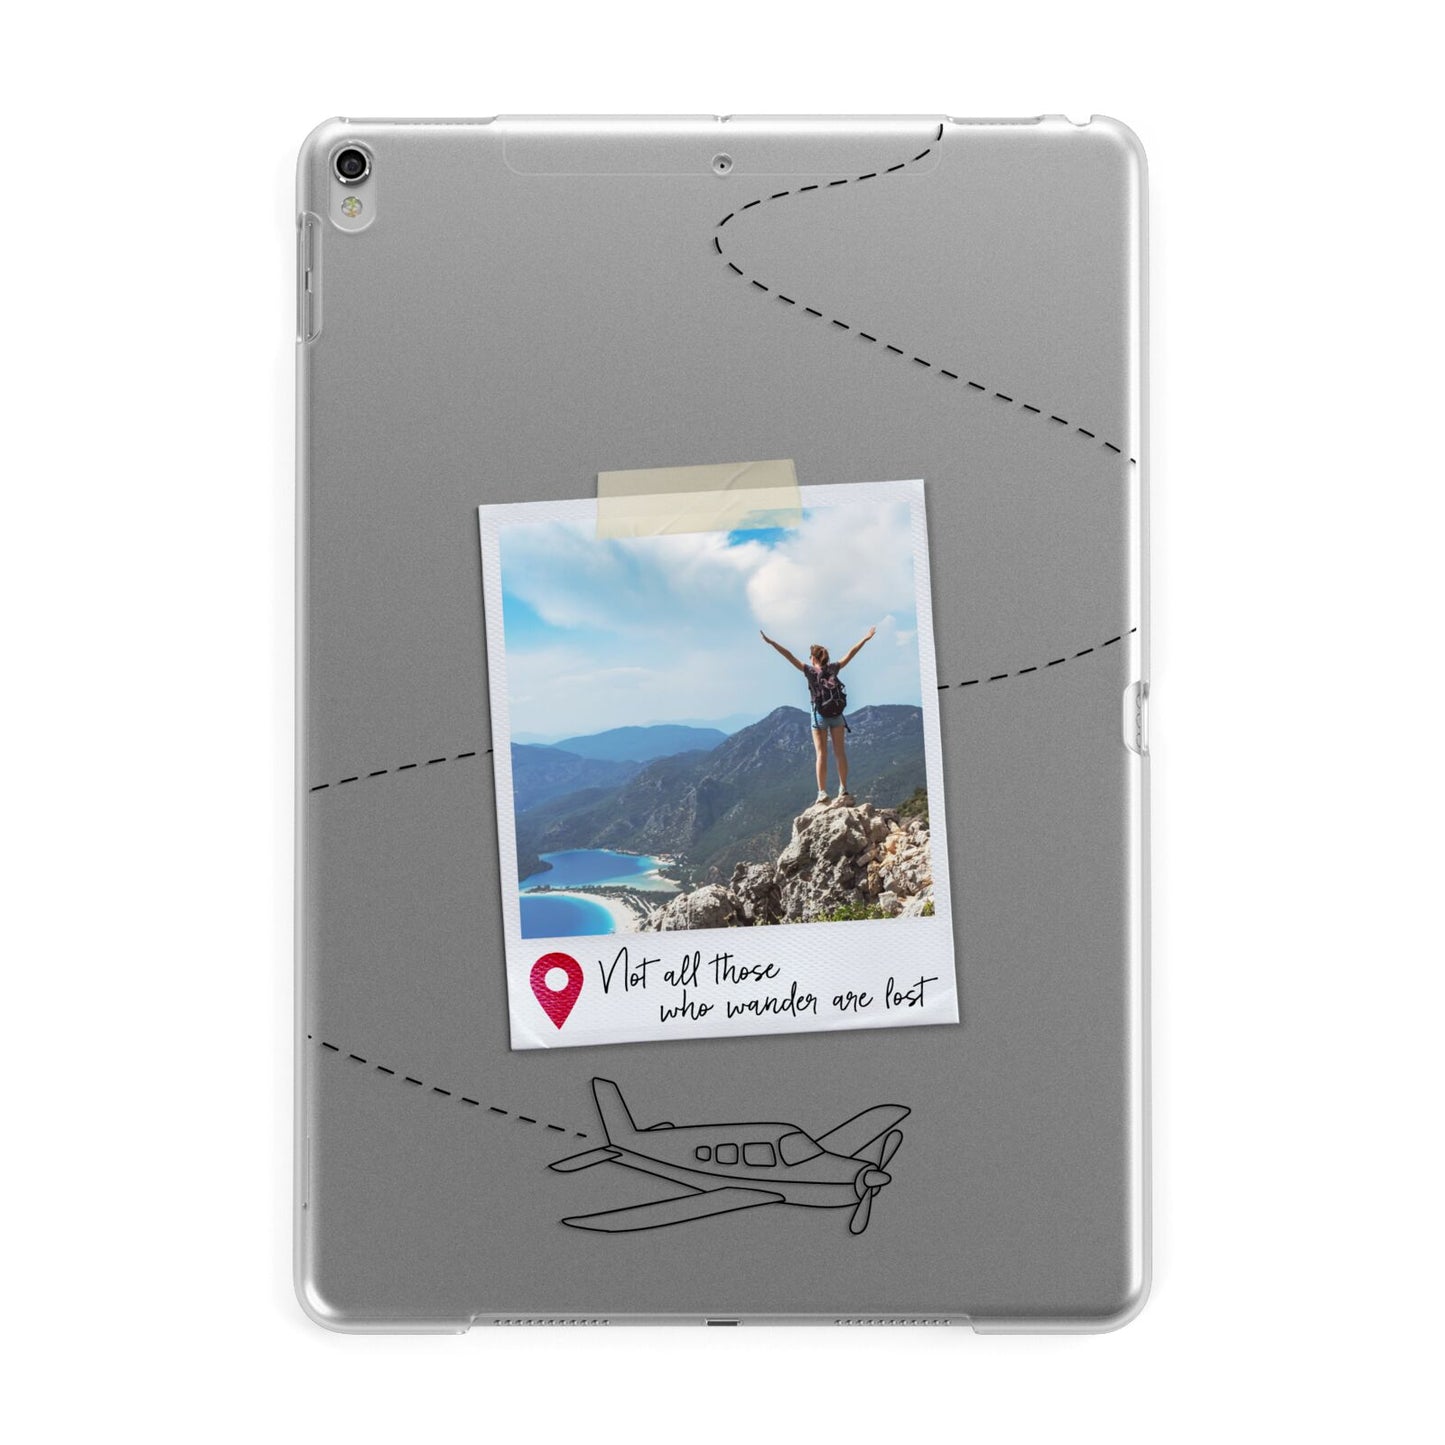 Backpacker Photo Upload Personalised Apple iPad Silver Case